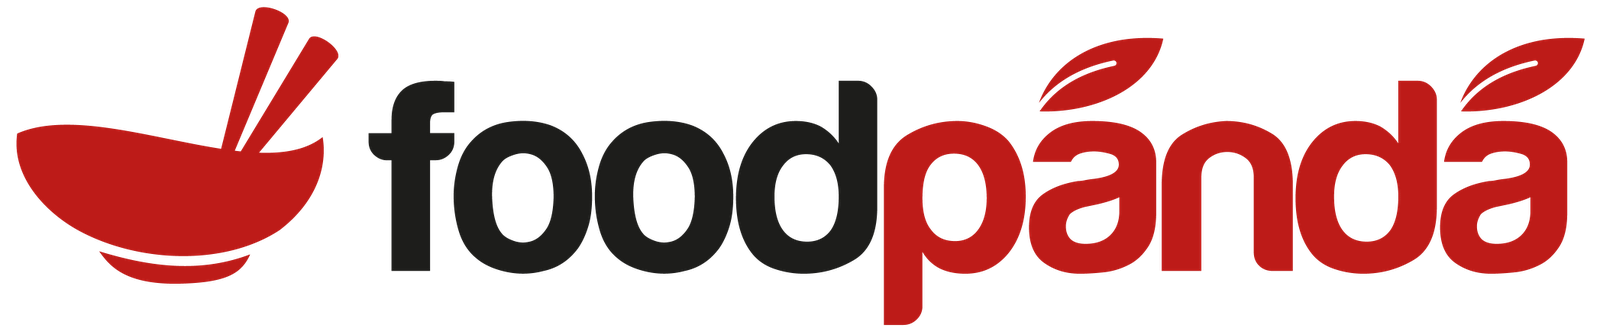 logo_foodpanda.png